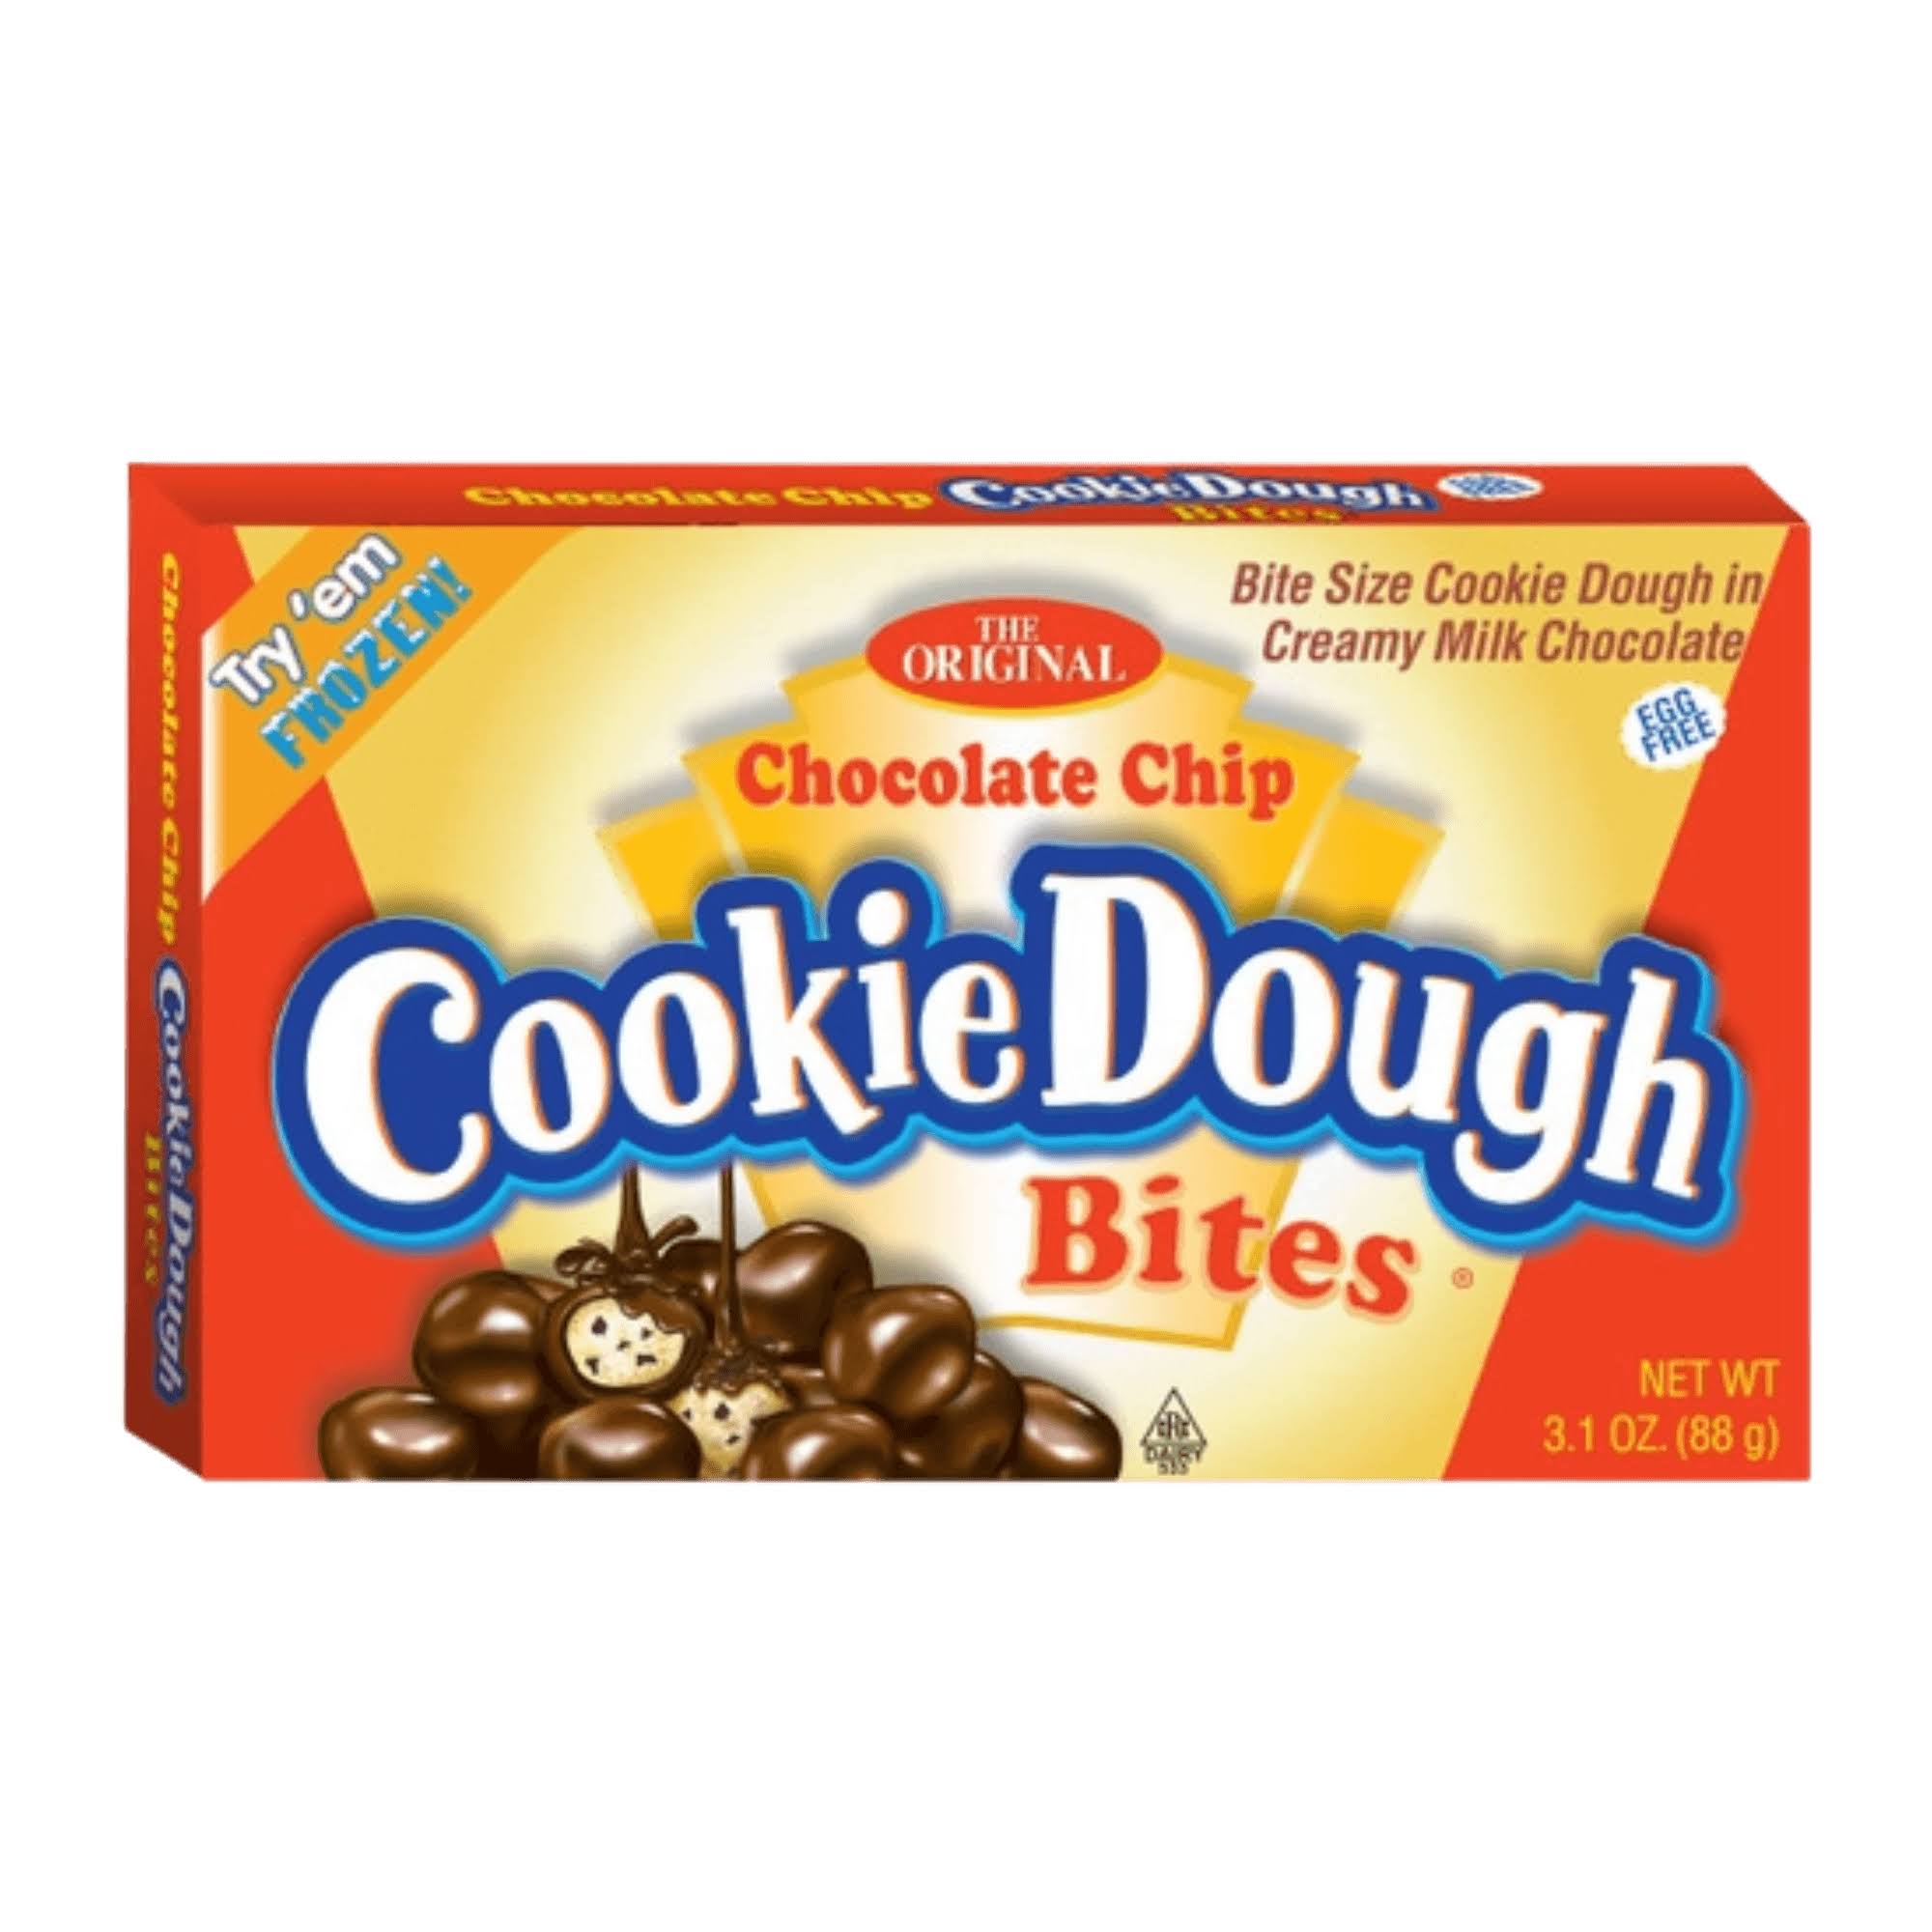 COOKIE DOUGH BITES - CHOCOLATE CHIP BITES